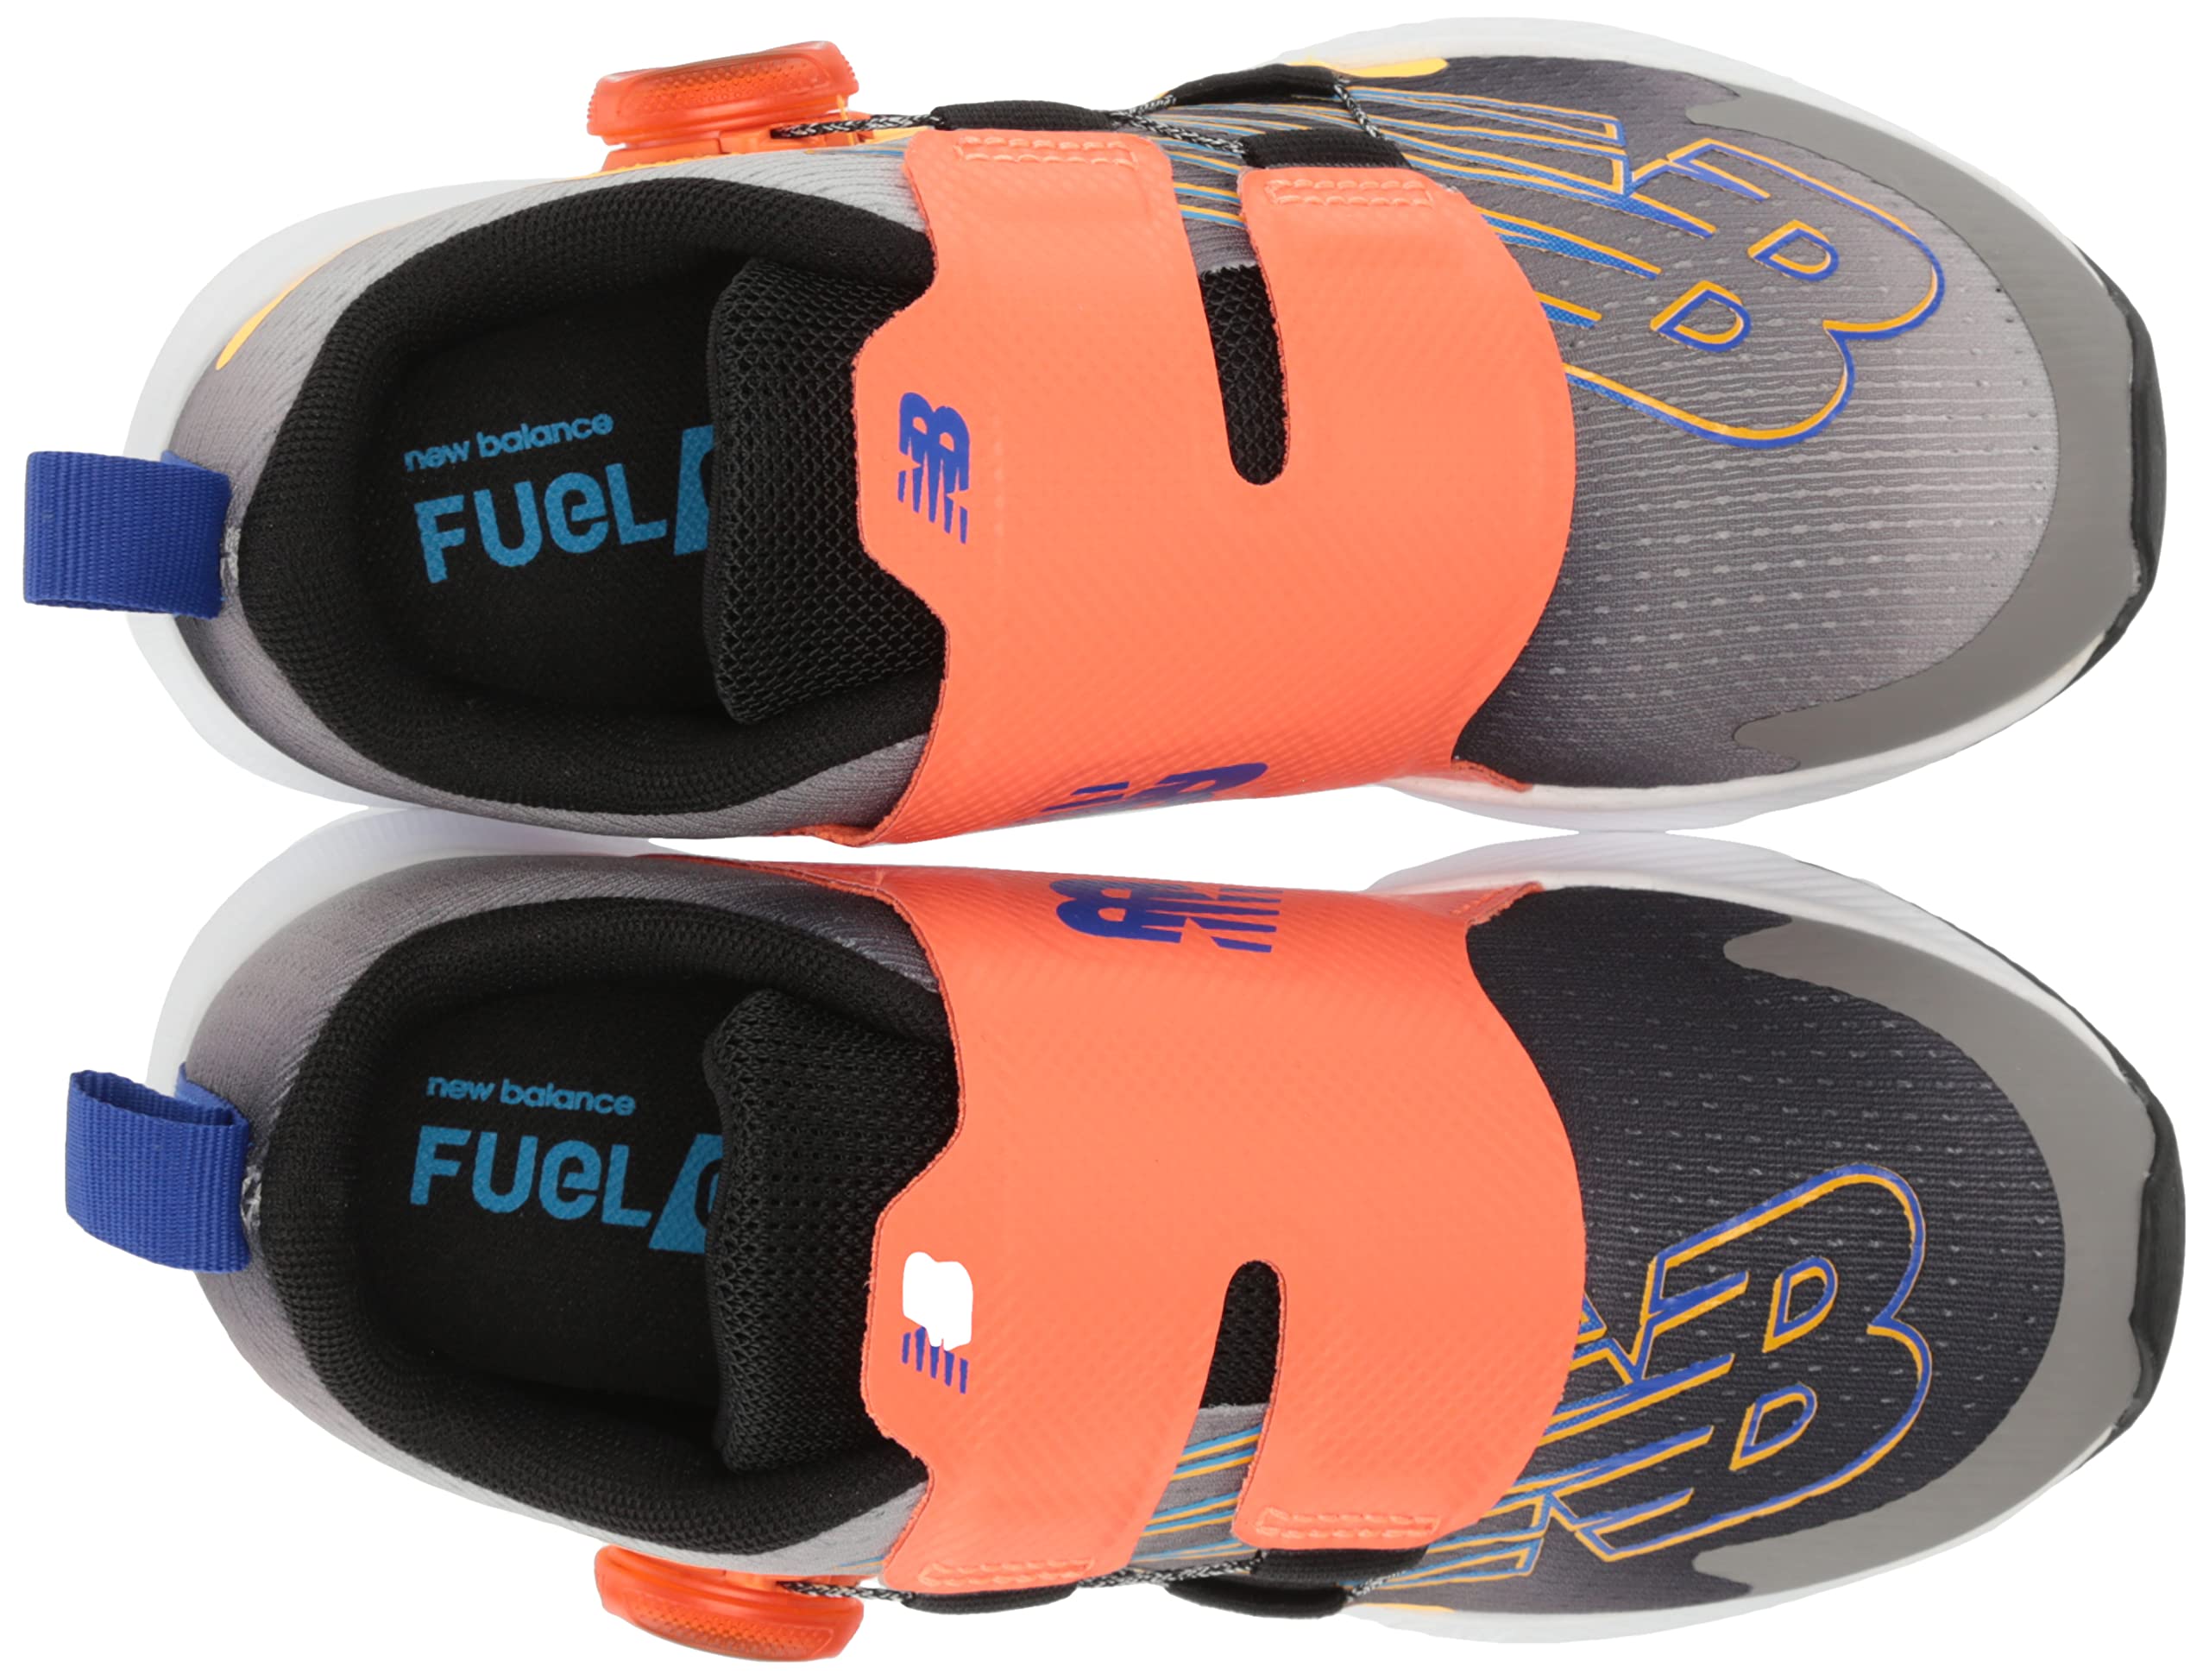 New Balance Kid's FuelCore Reveal V3 Boa Running Shoe